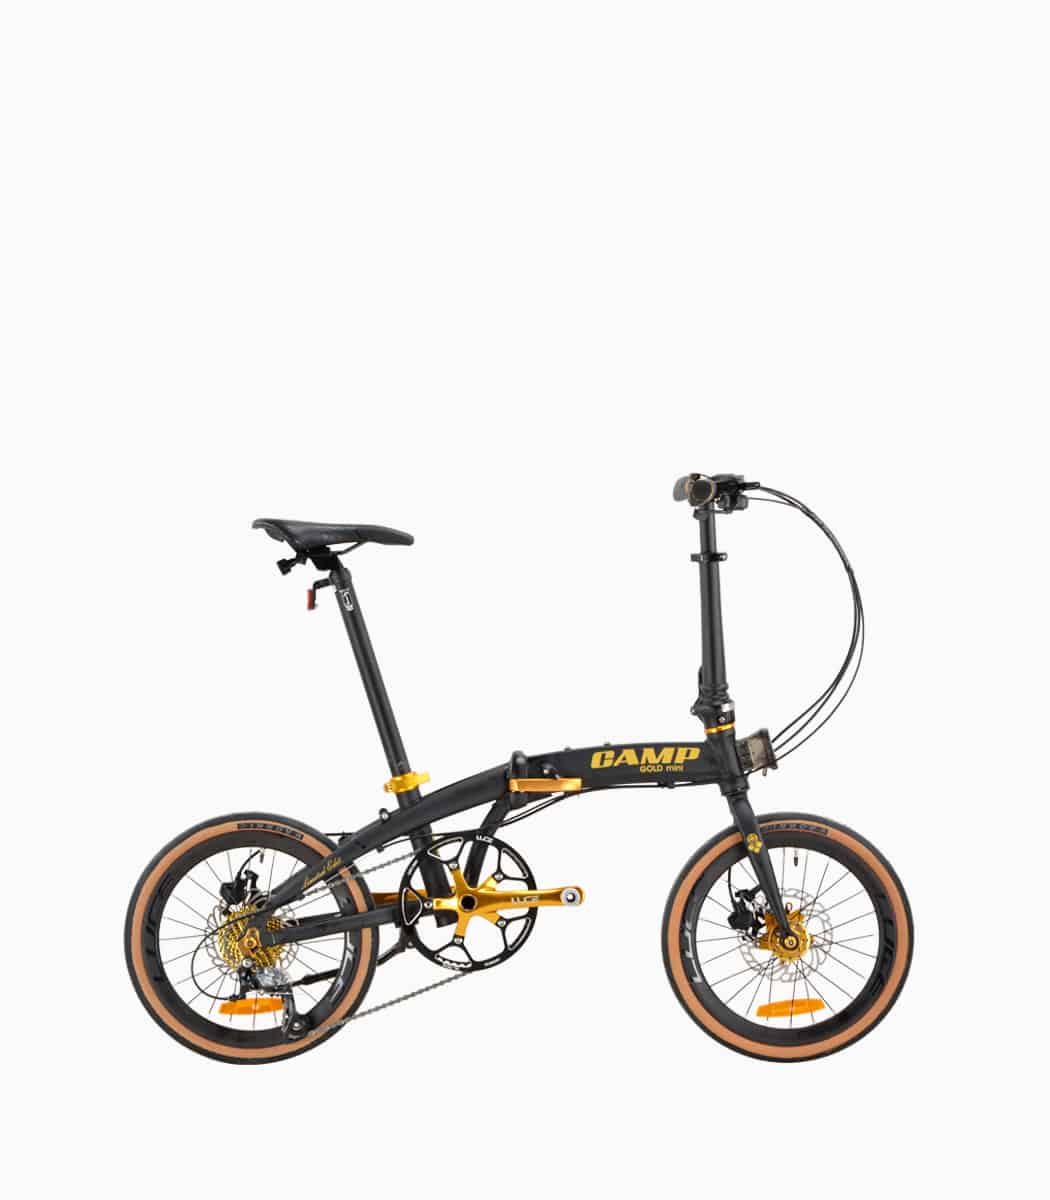 CAMP GOLD Mini (MATT BLACK) foldable bicycle right